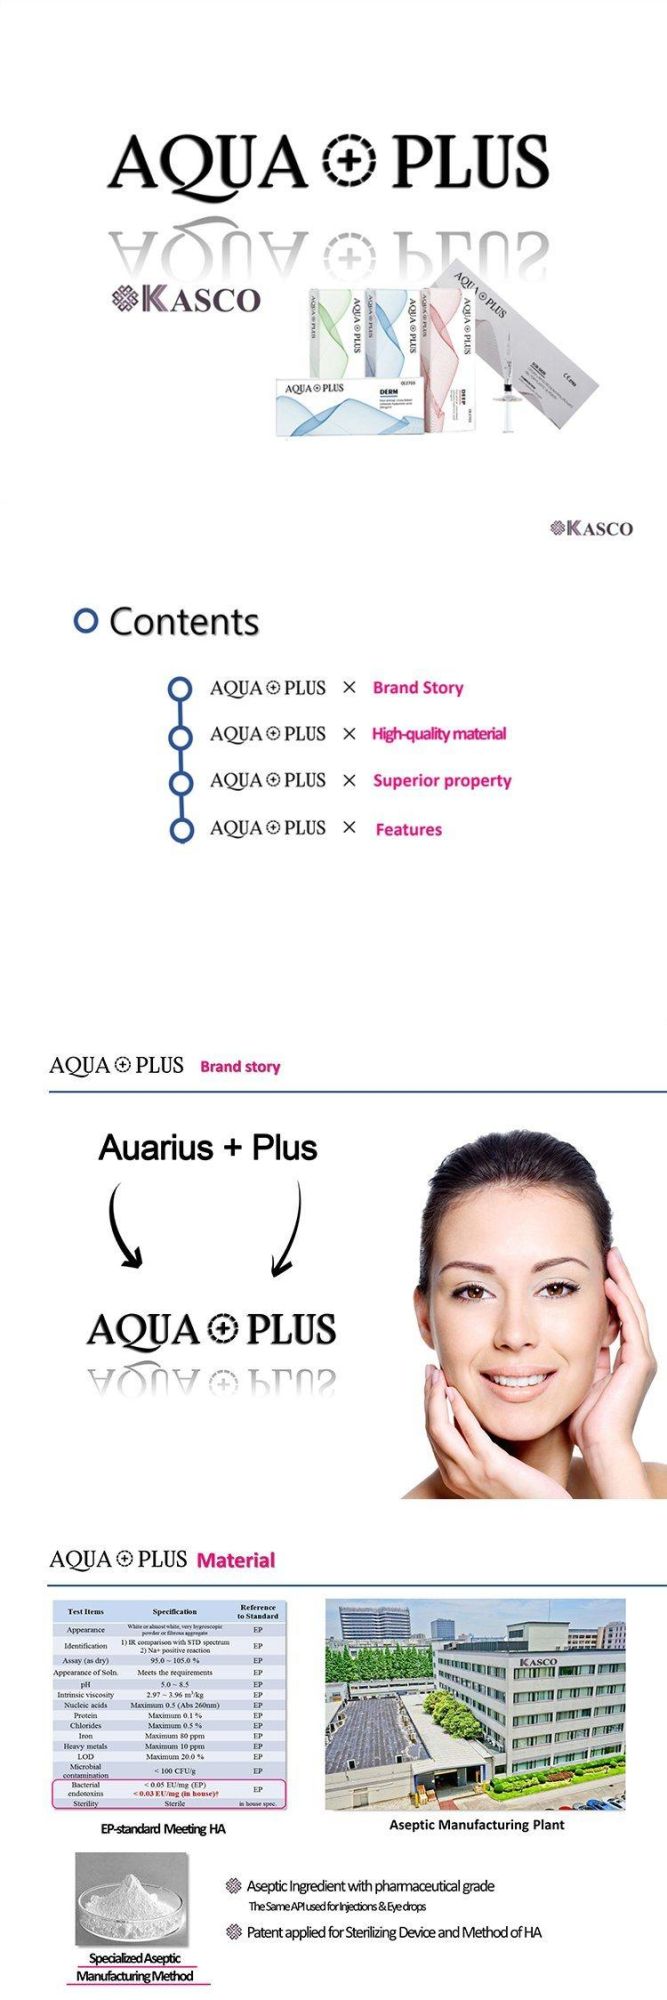 Aqua Plus Lips Syringe Dermal Filler for Nose Lip Cheek 10ml Beauty Injection Dermal Fillers